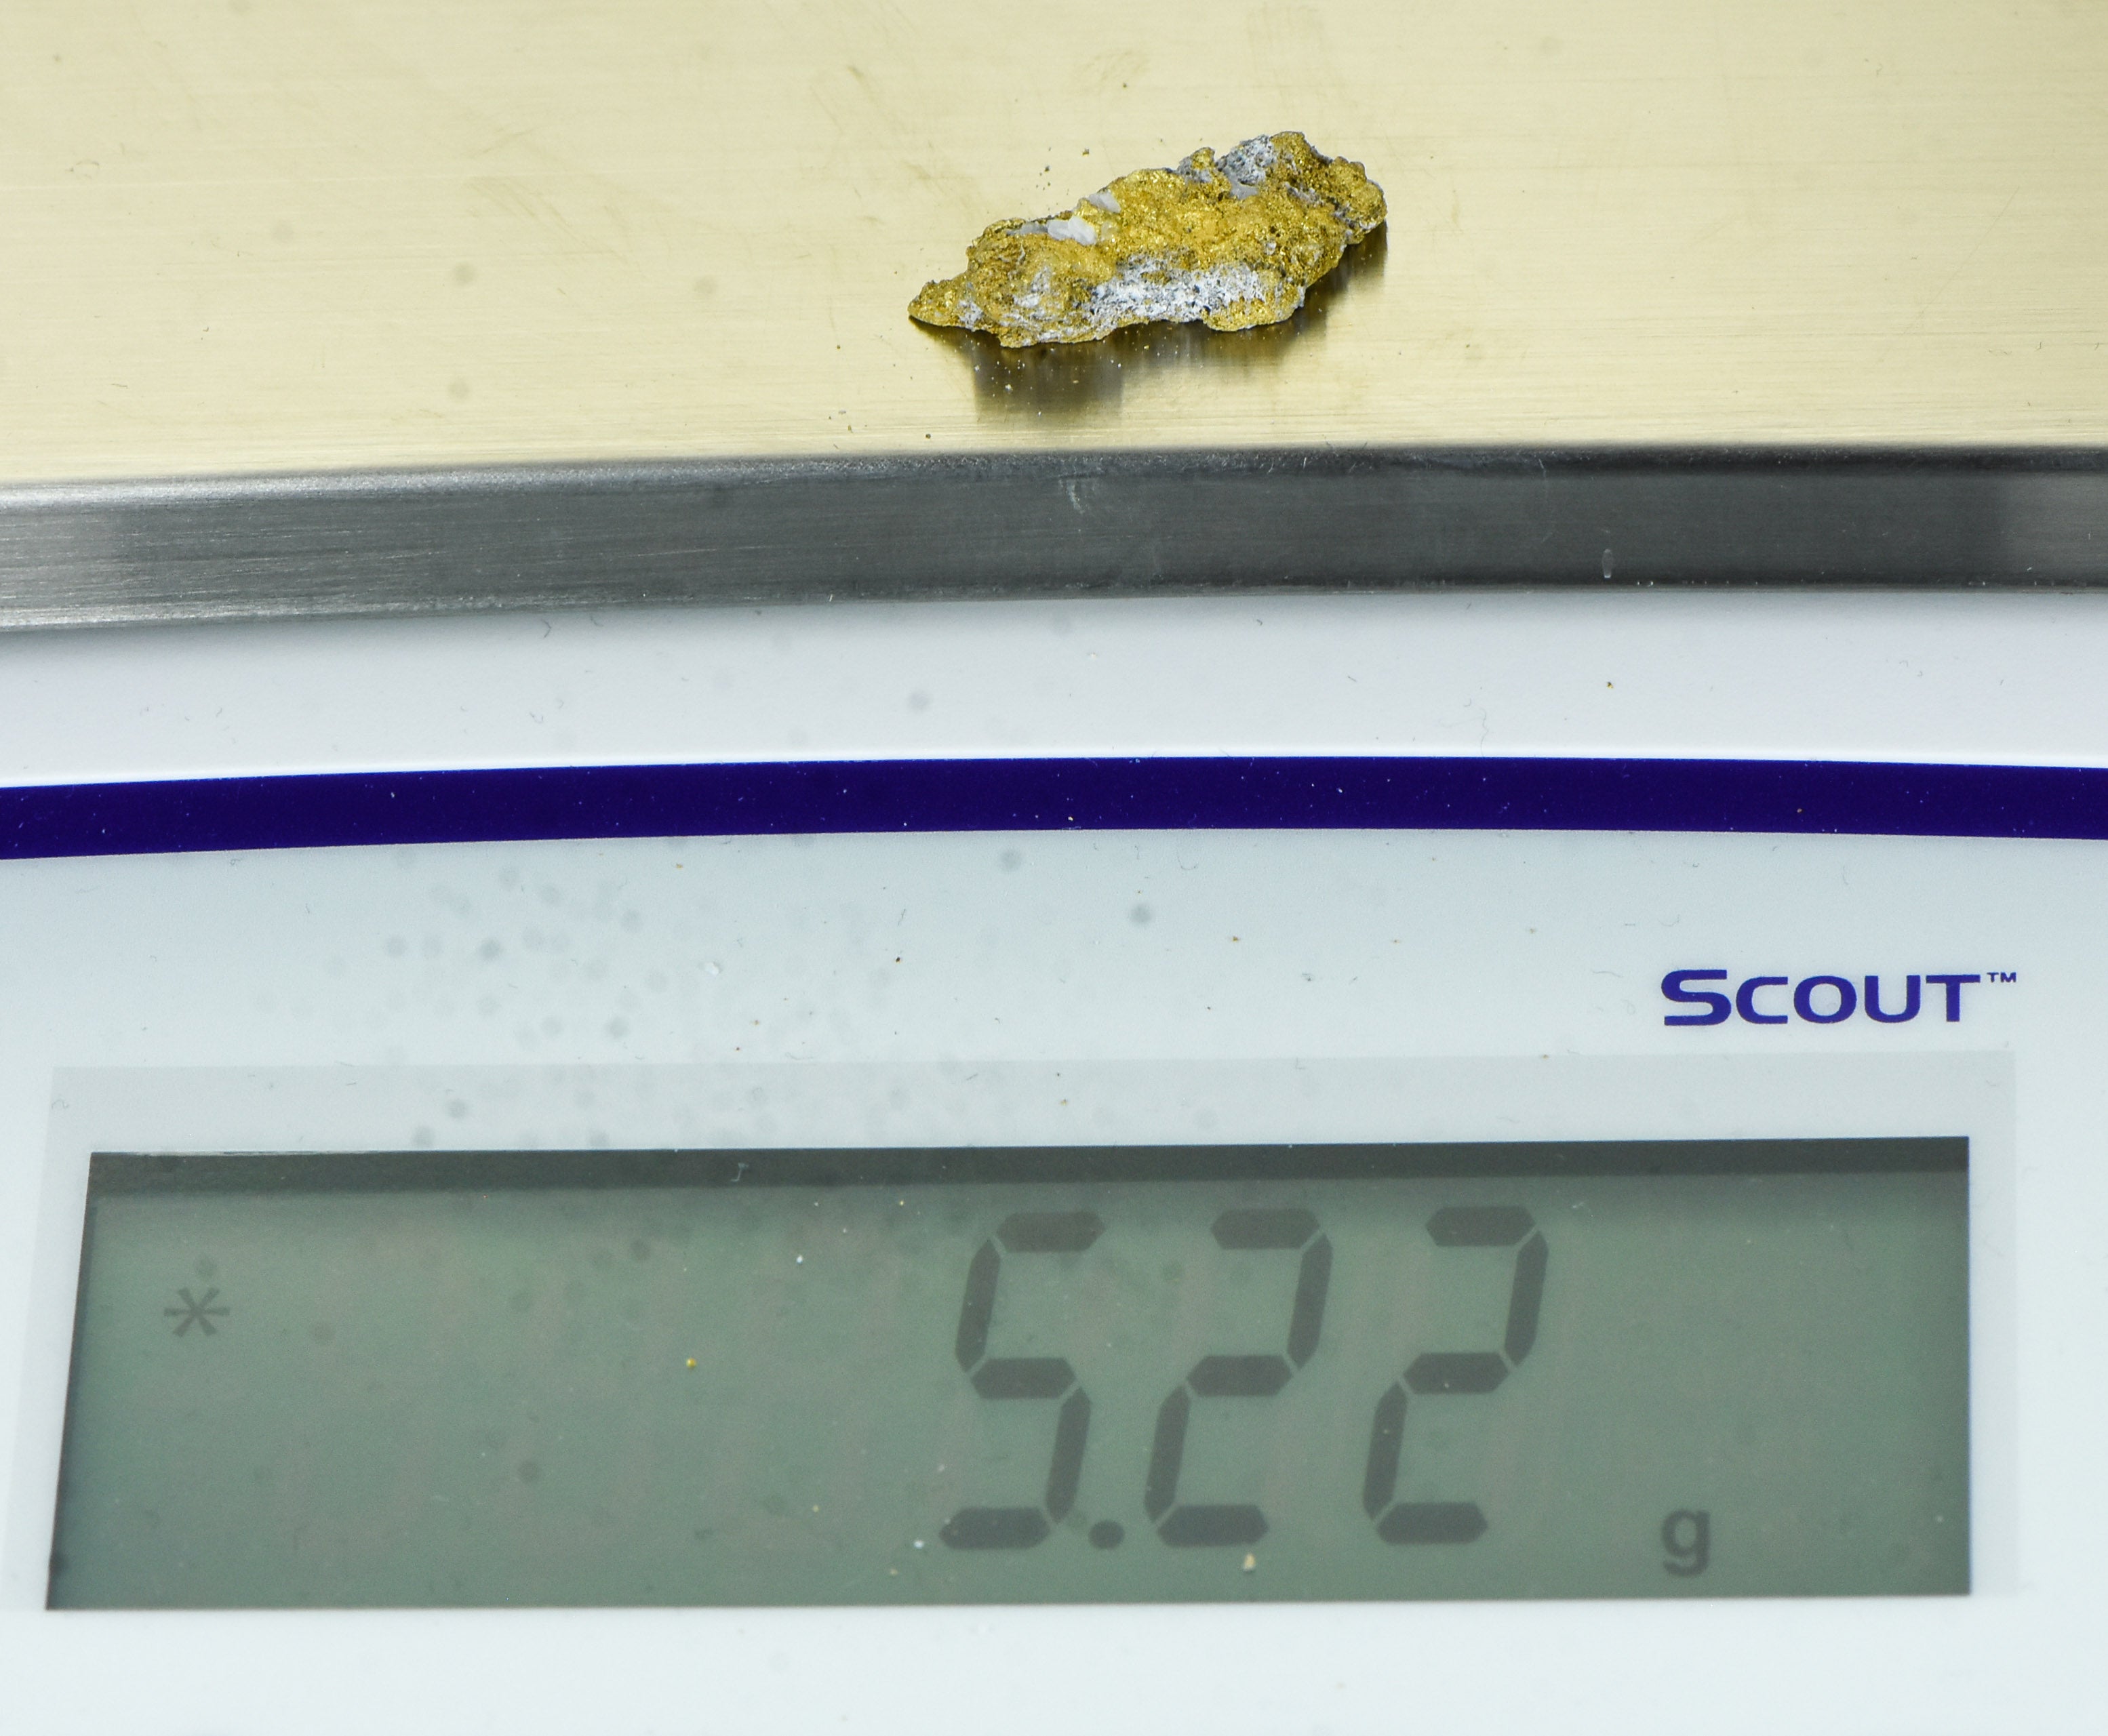 #OM-66 Crystalline Gold Nugget Specimen 5.22 Grams Oriental Mine Sierra County California Rare